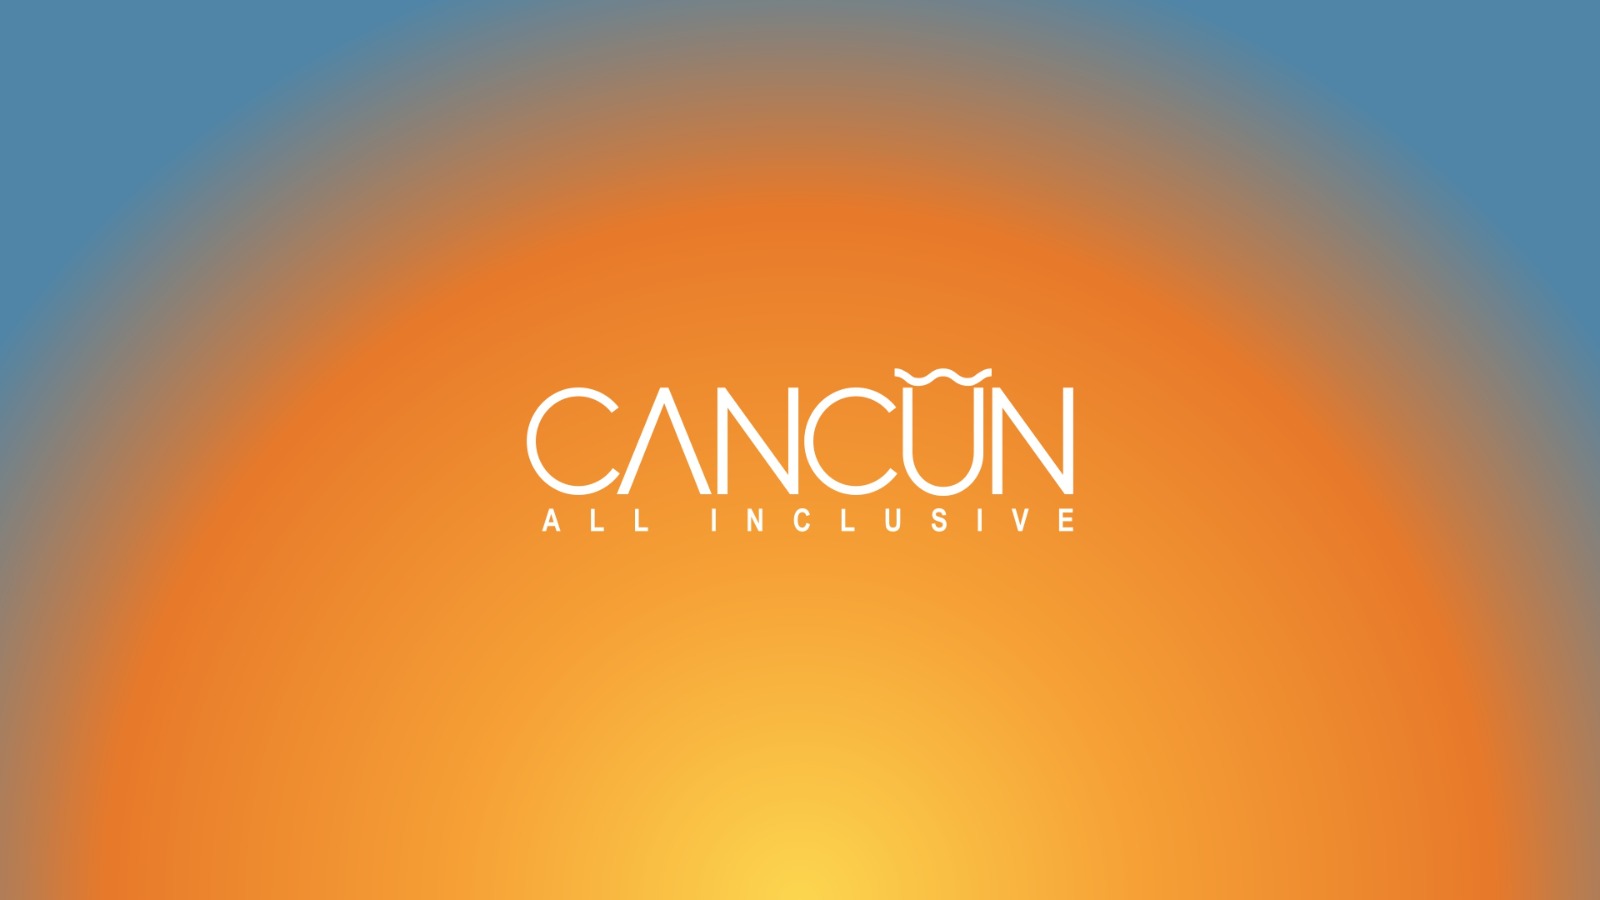 Cancun All Inclusive